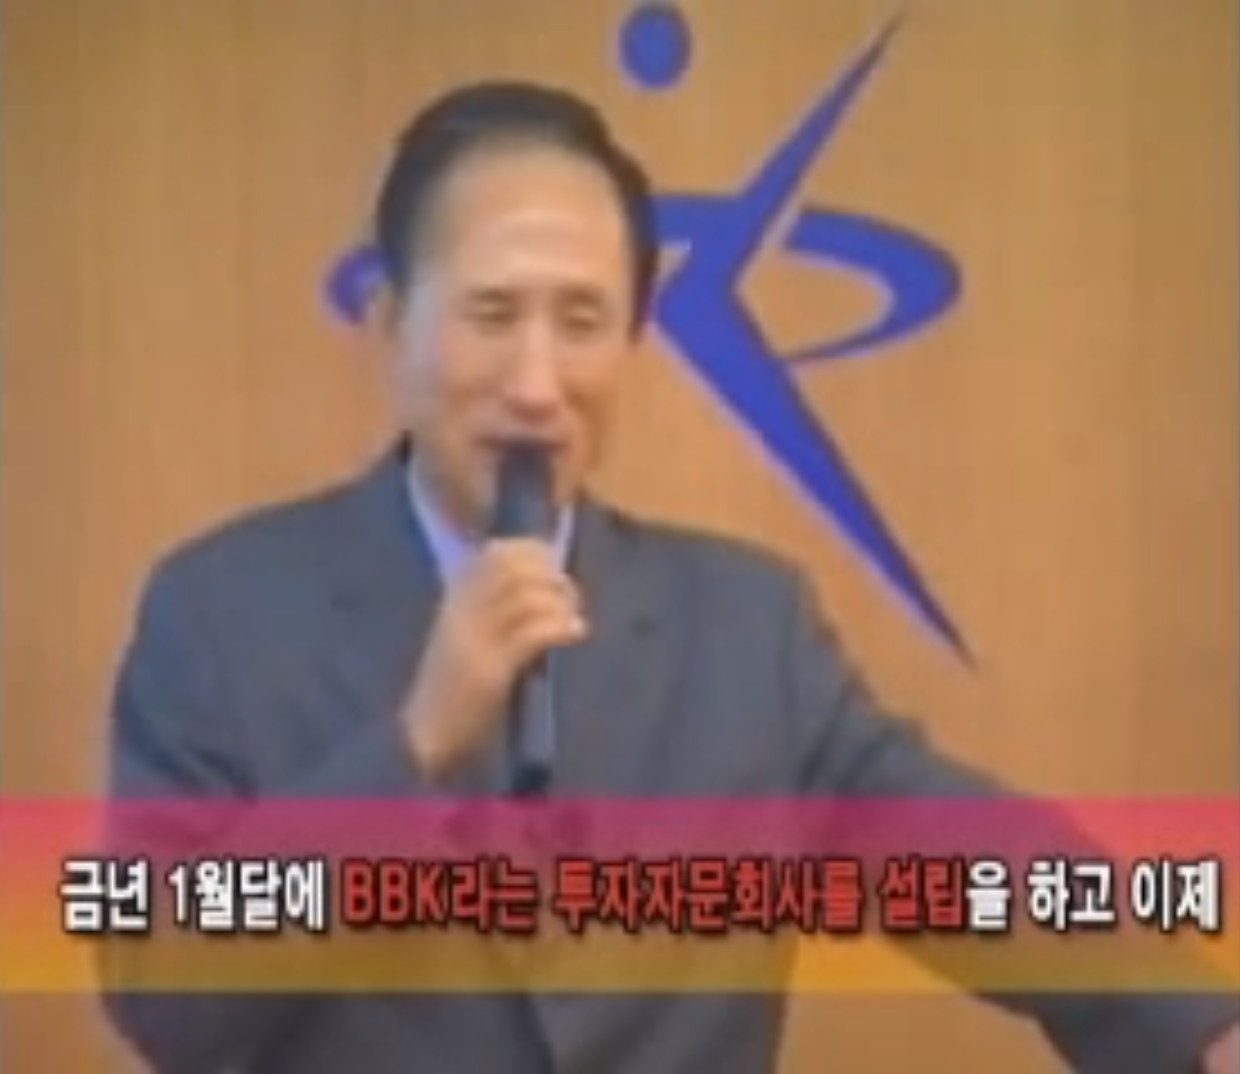 ‘BBK 설립’을 언급했던 이명박 전 대통령의 2000년 광운대 특강 동영상.